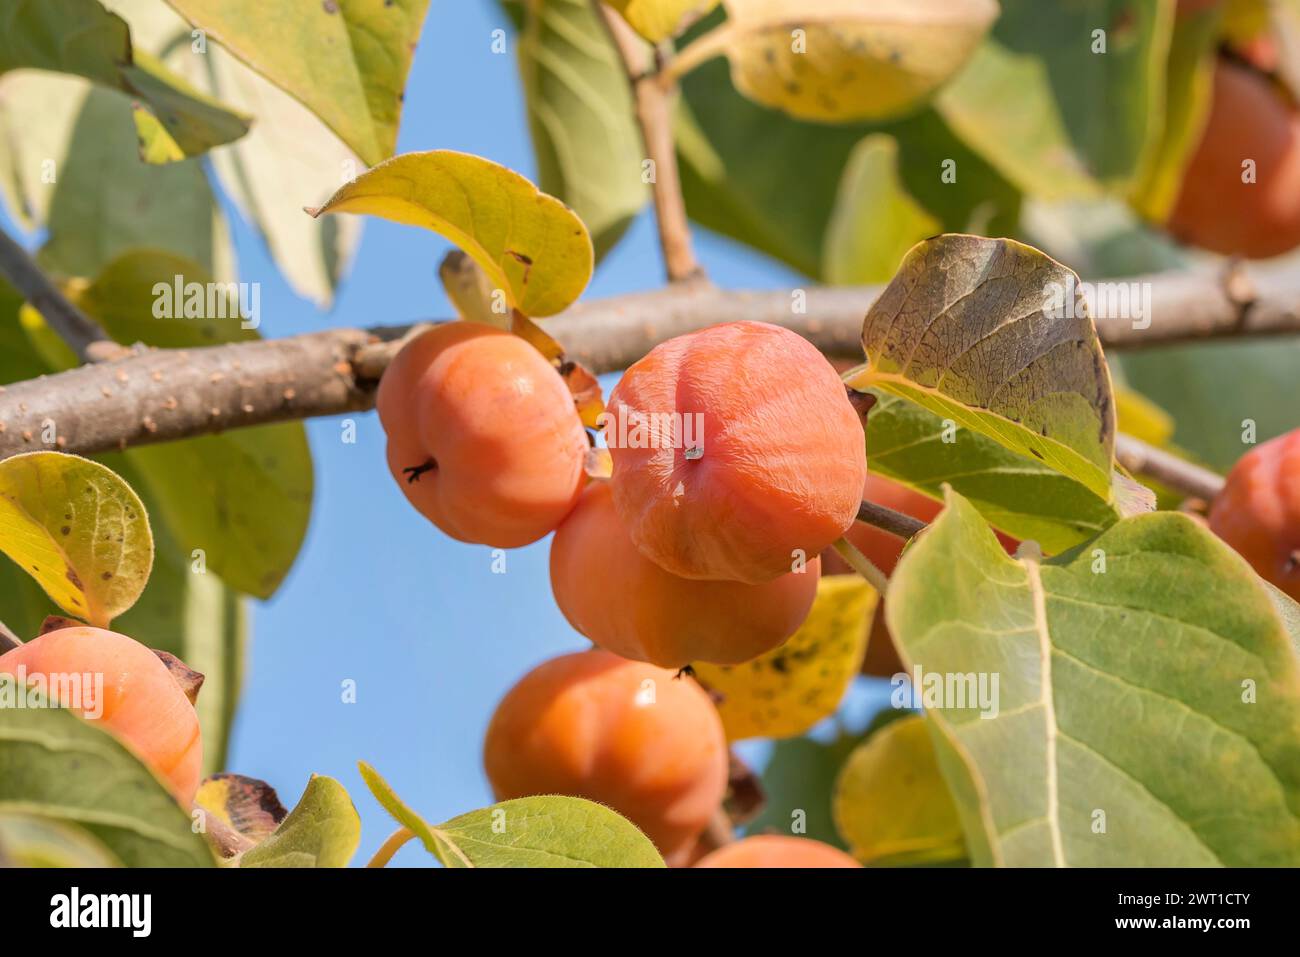 kaki plum tree, Japanese persimmon (Diospyros kaki), fruits on a branch Stock Photo